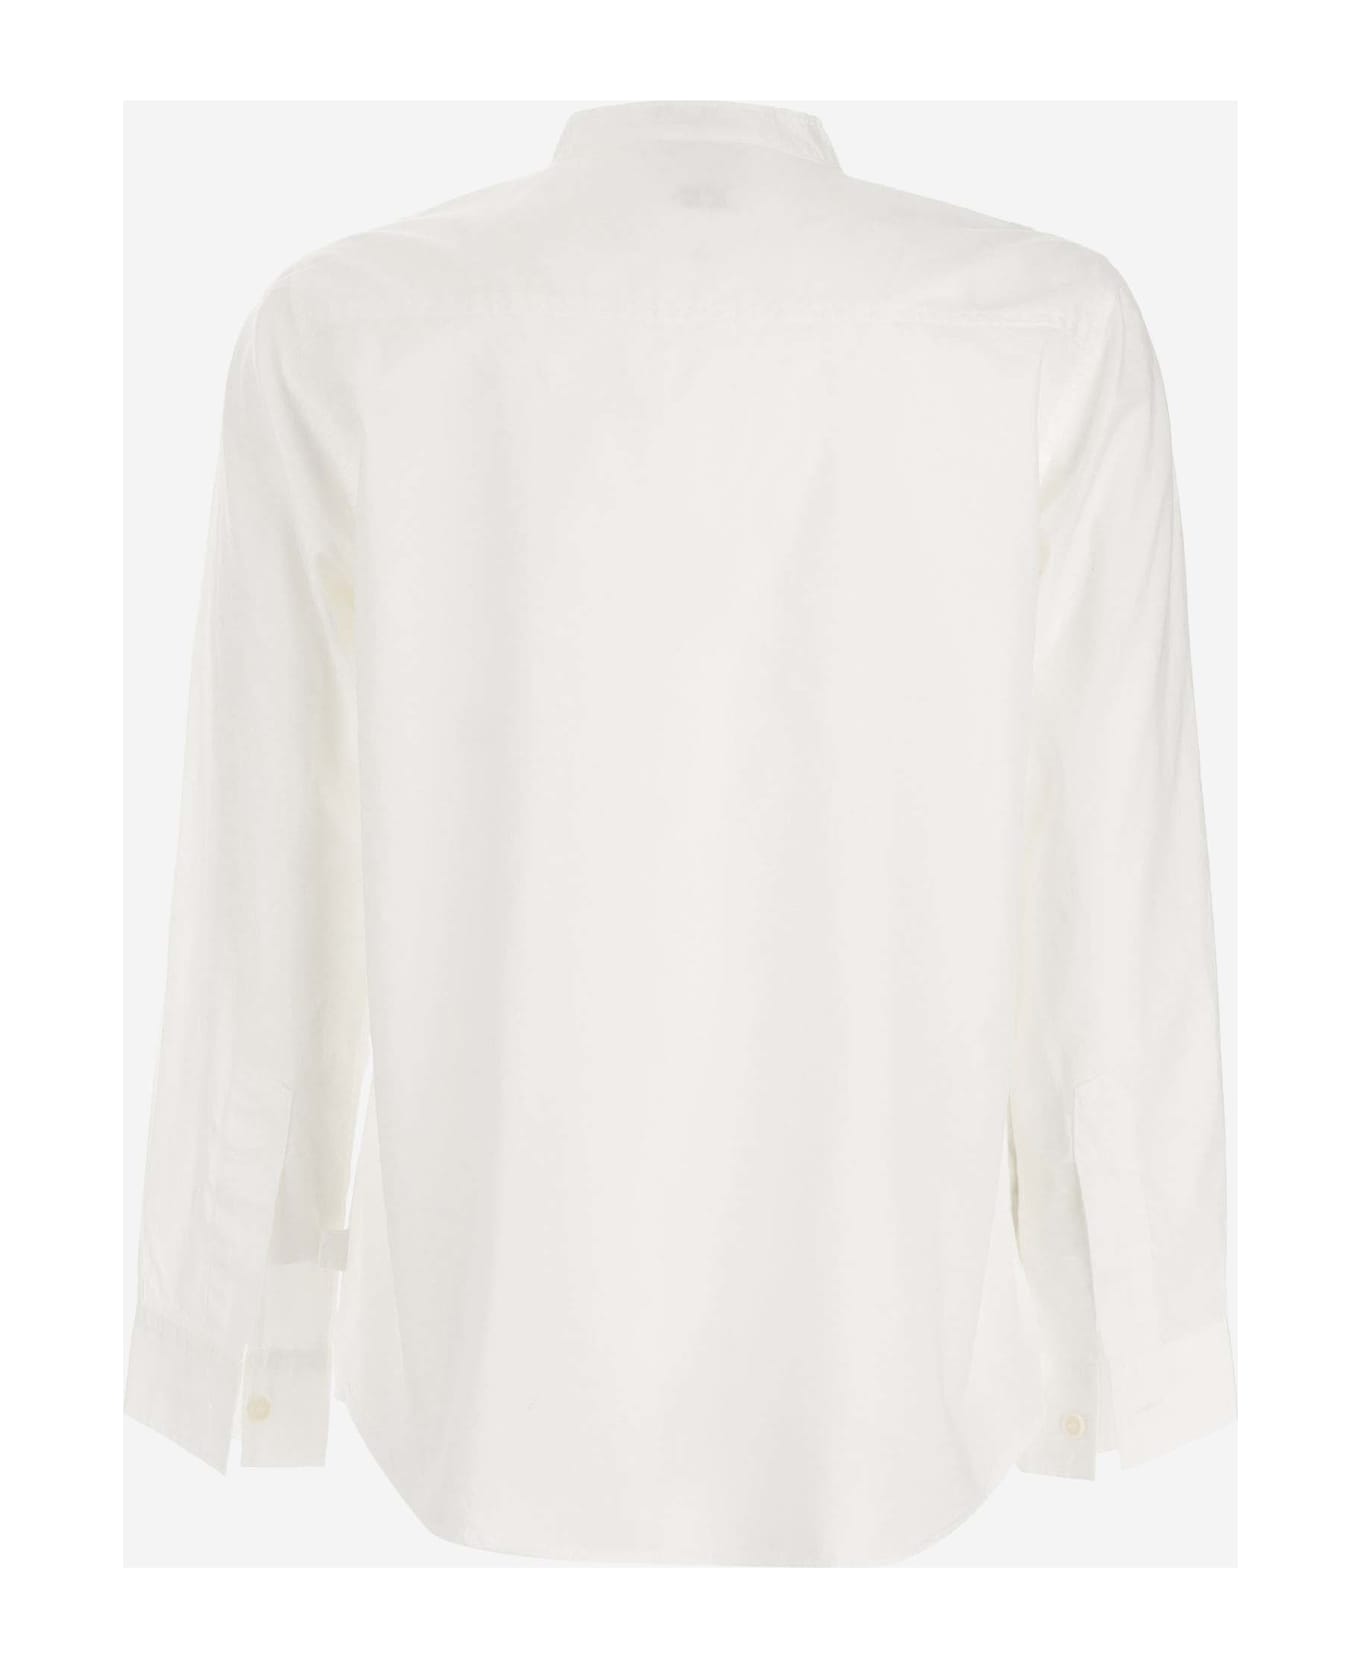 Il Gufo Stretch Cotton Shirt - White